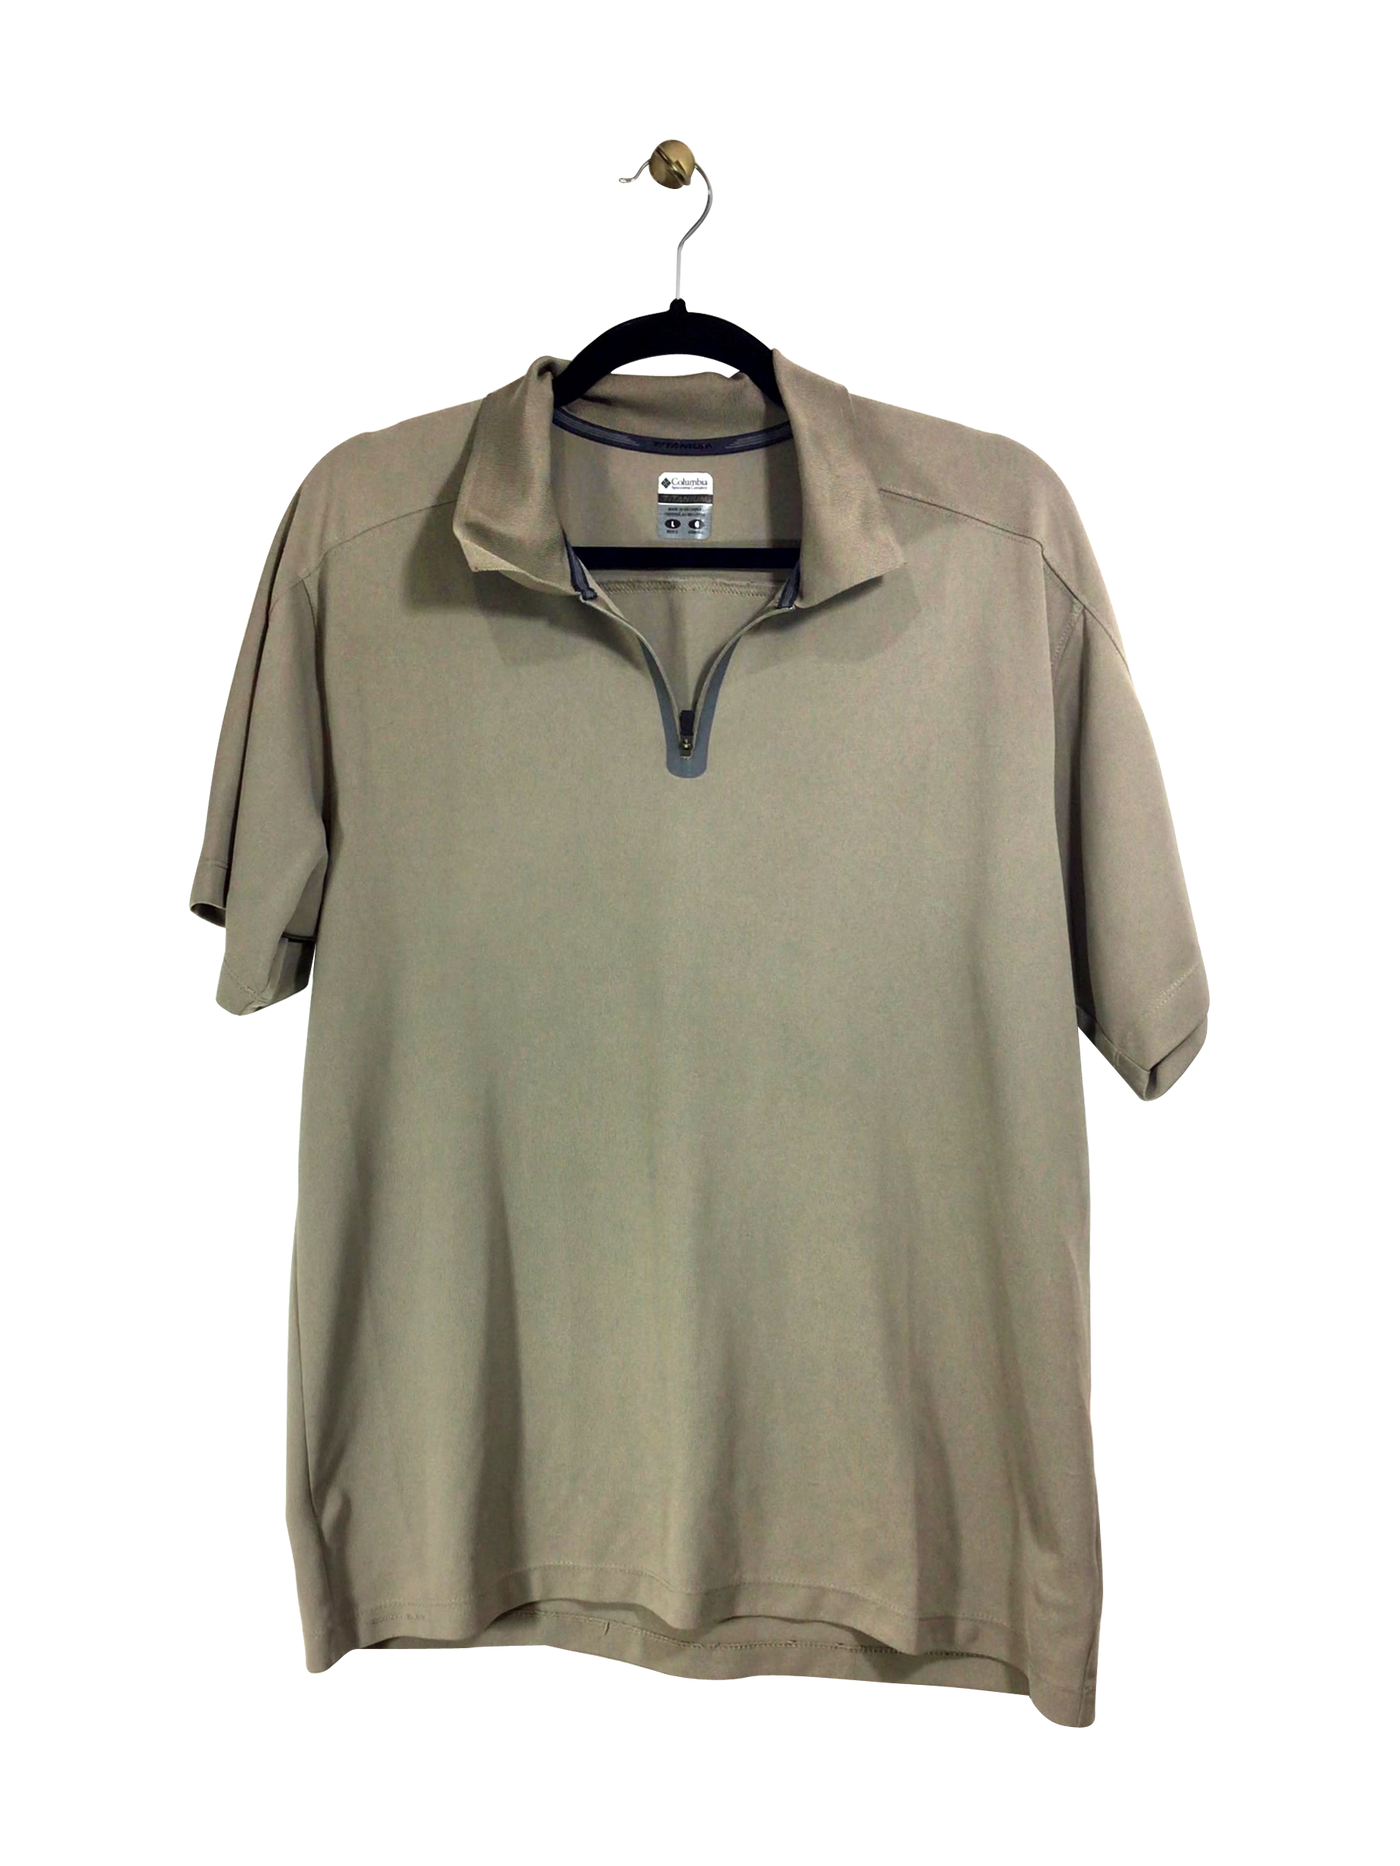 COLUMBIA T-shirt Regular fit in Gray - Size L | 14.99 $ KOOP